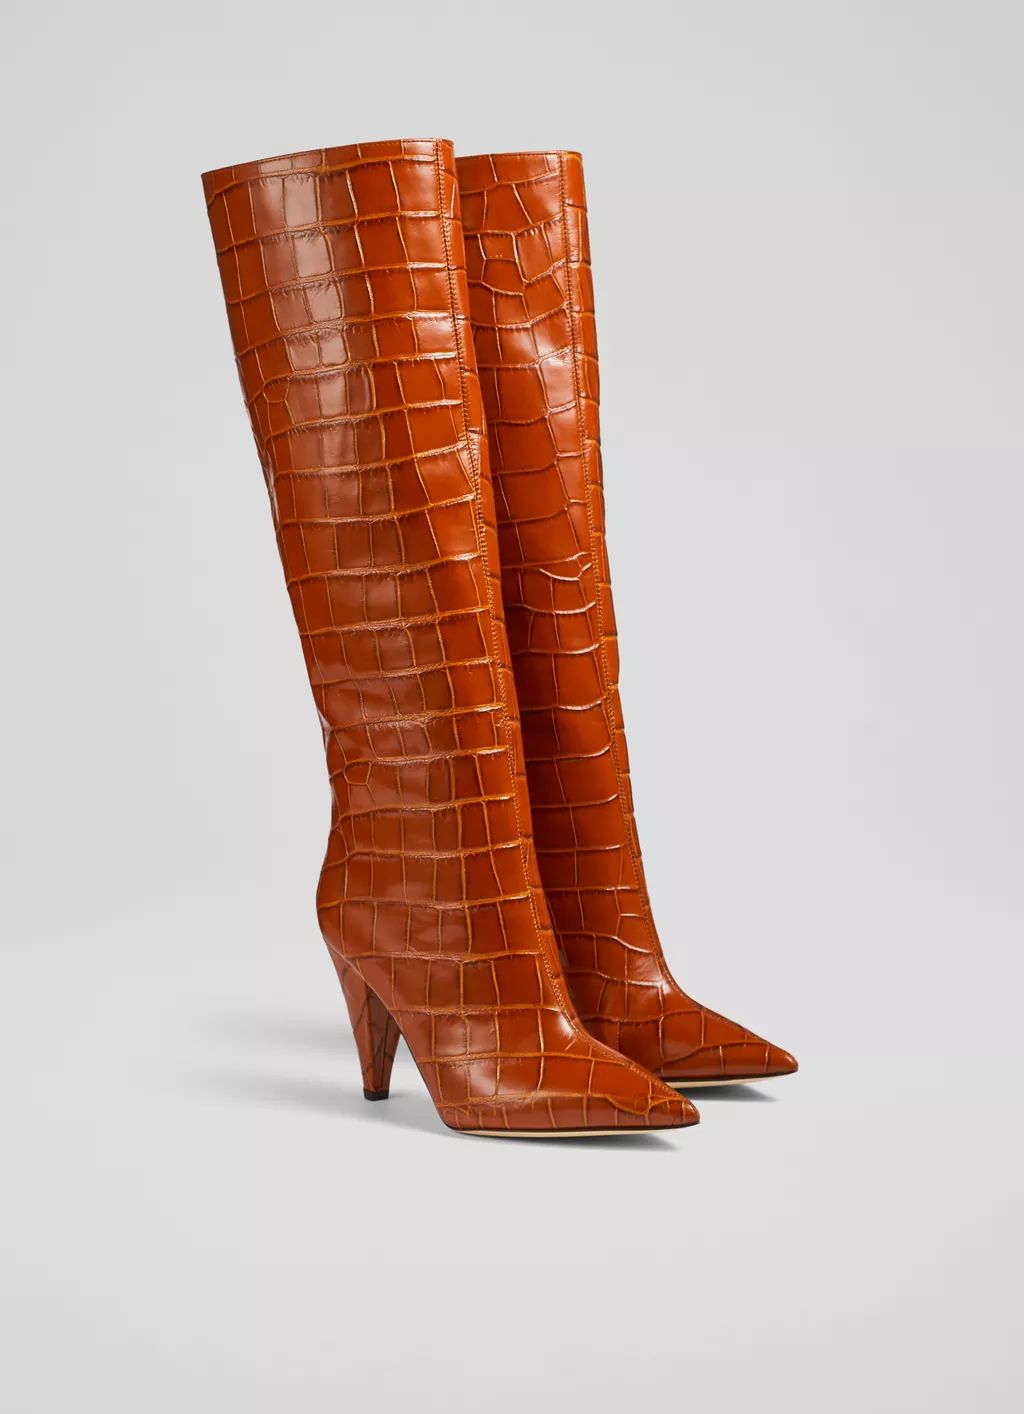 Allegra Ginger Croc-Effect Leather Cone Heel Knee High Boots | L.K. Bennett (UK)